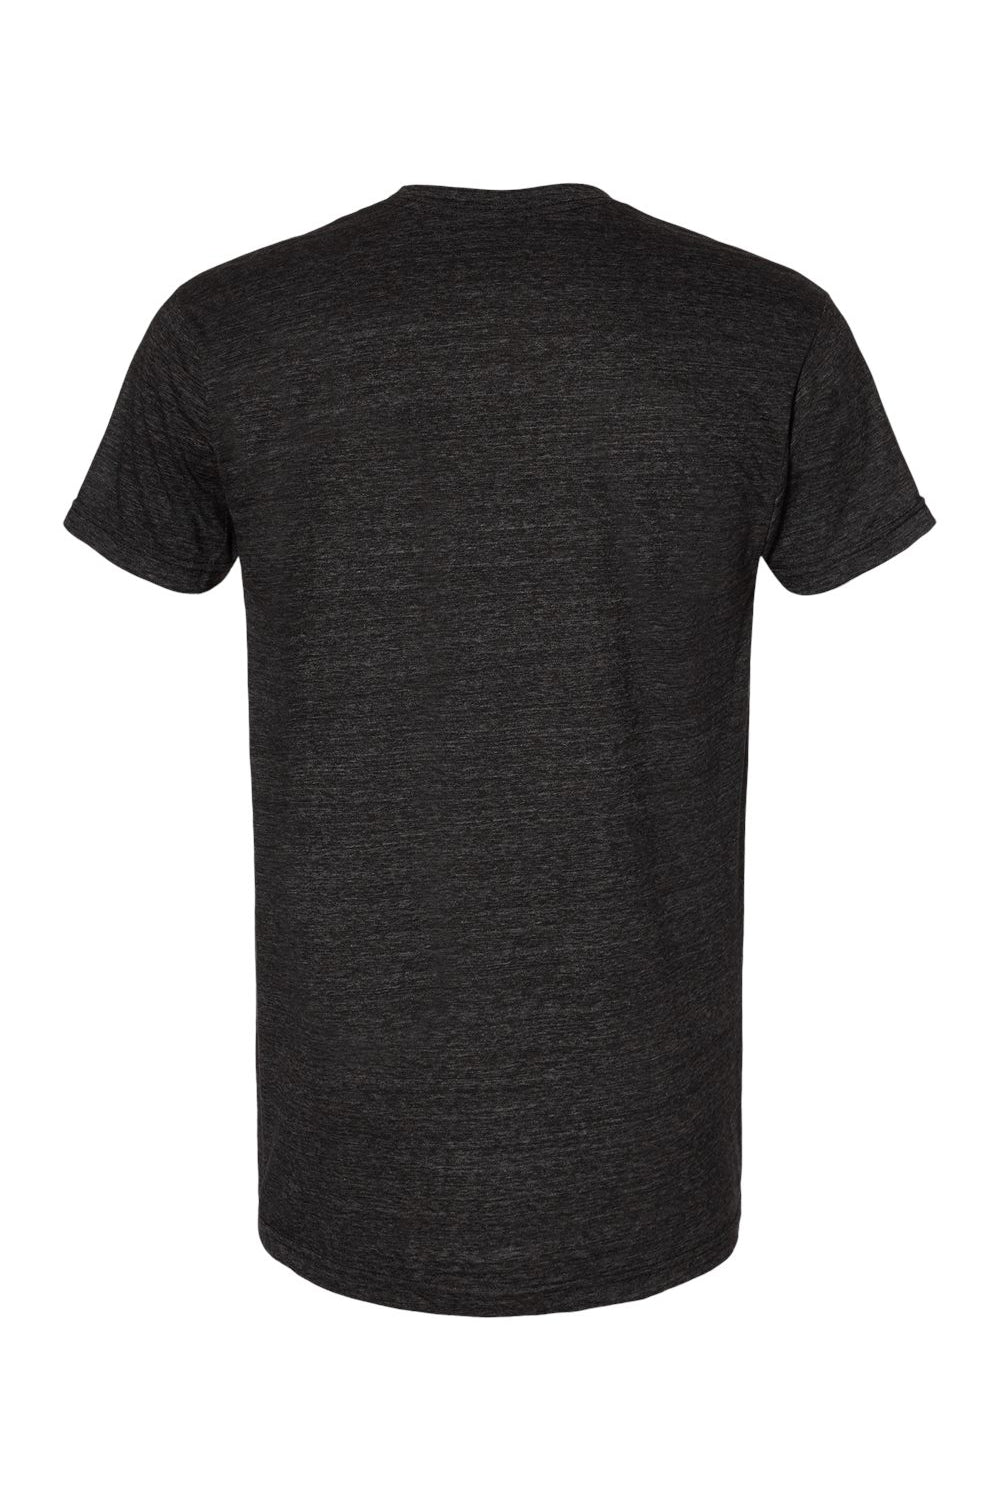 Bayside 5710 Mens USA Made Short Sleeve Crewneck T-Shirt Charcoal Grey Flat Back